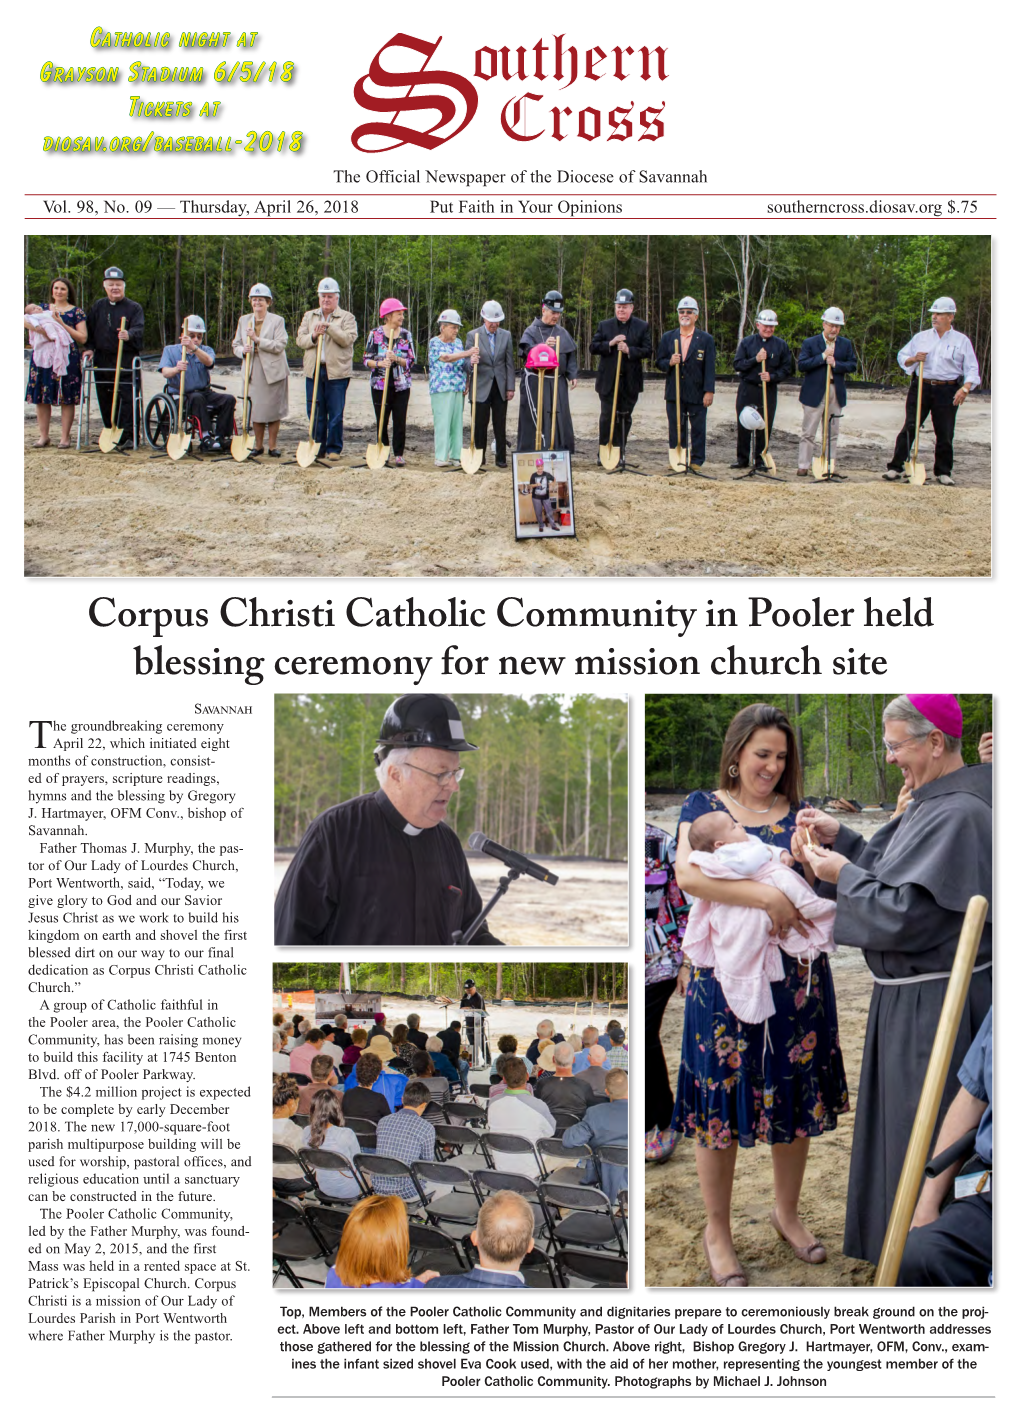 Corpus Christi Catholic Community in Pooler Held Blessing Ceremony For